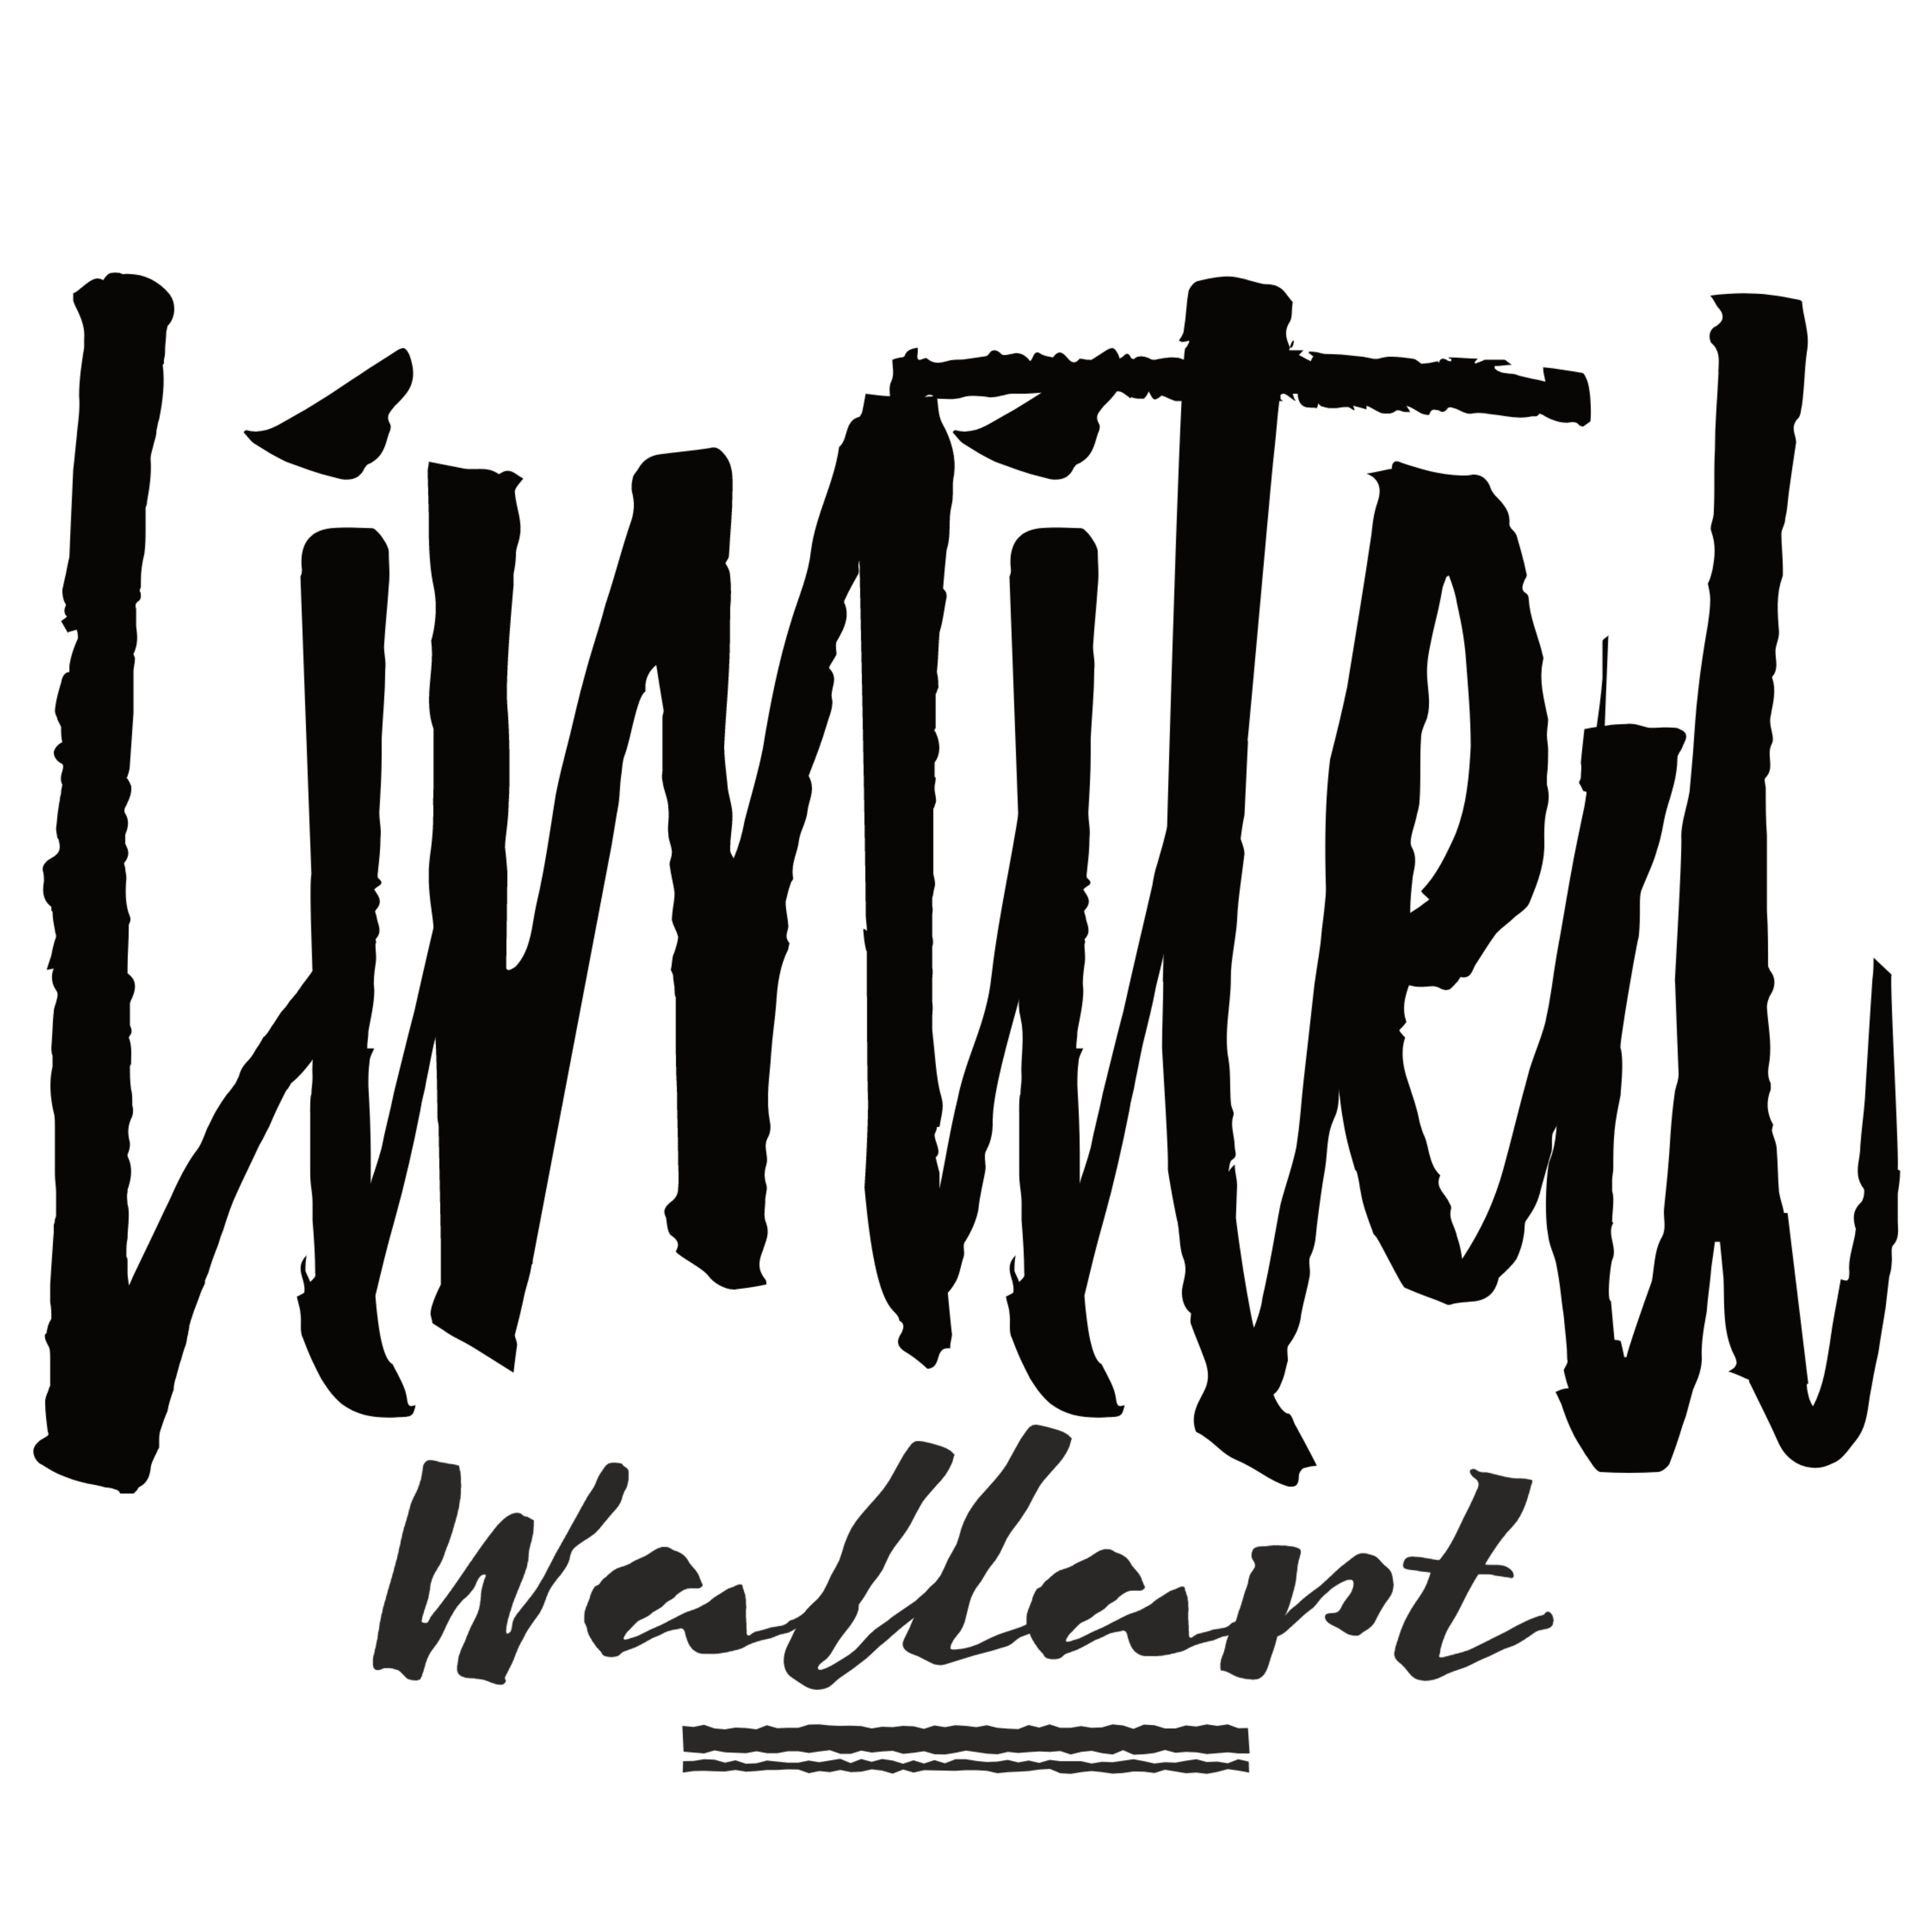 Limited-Wallart